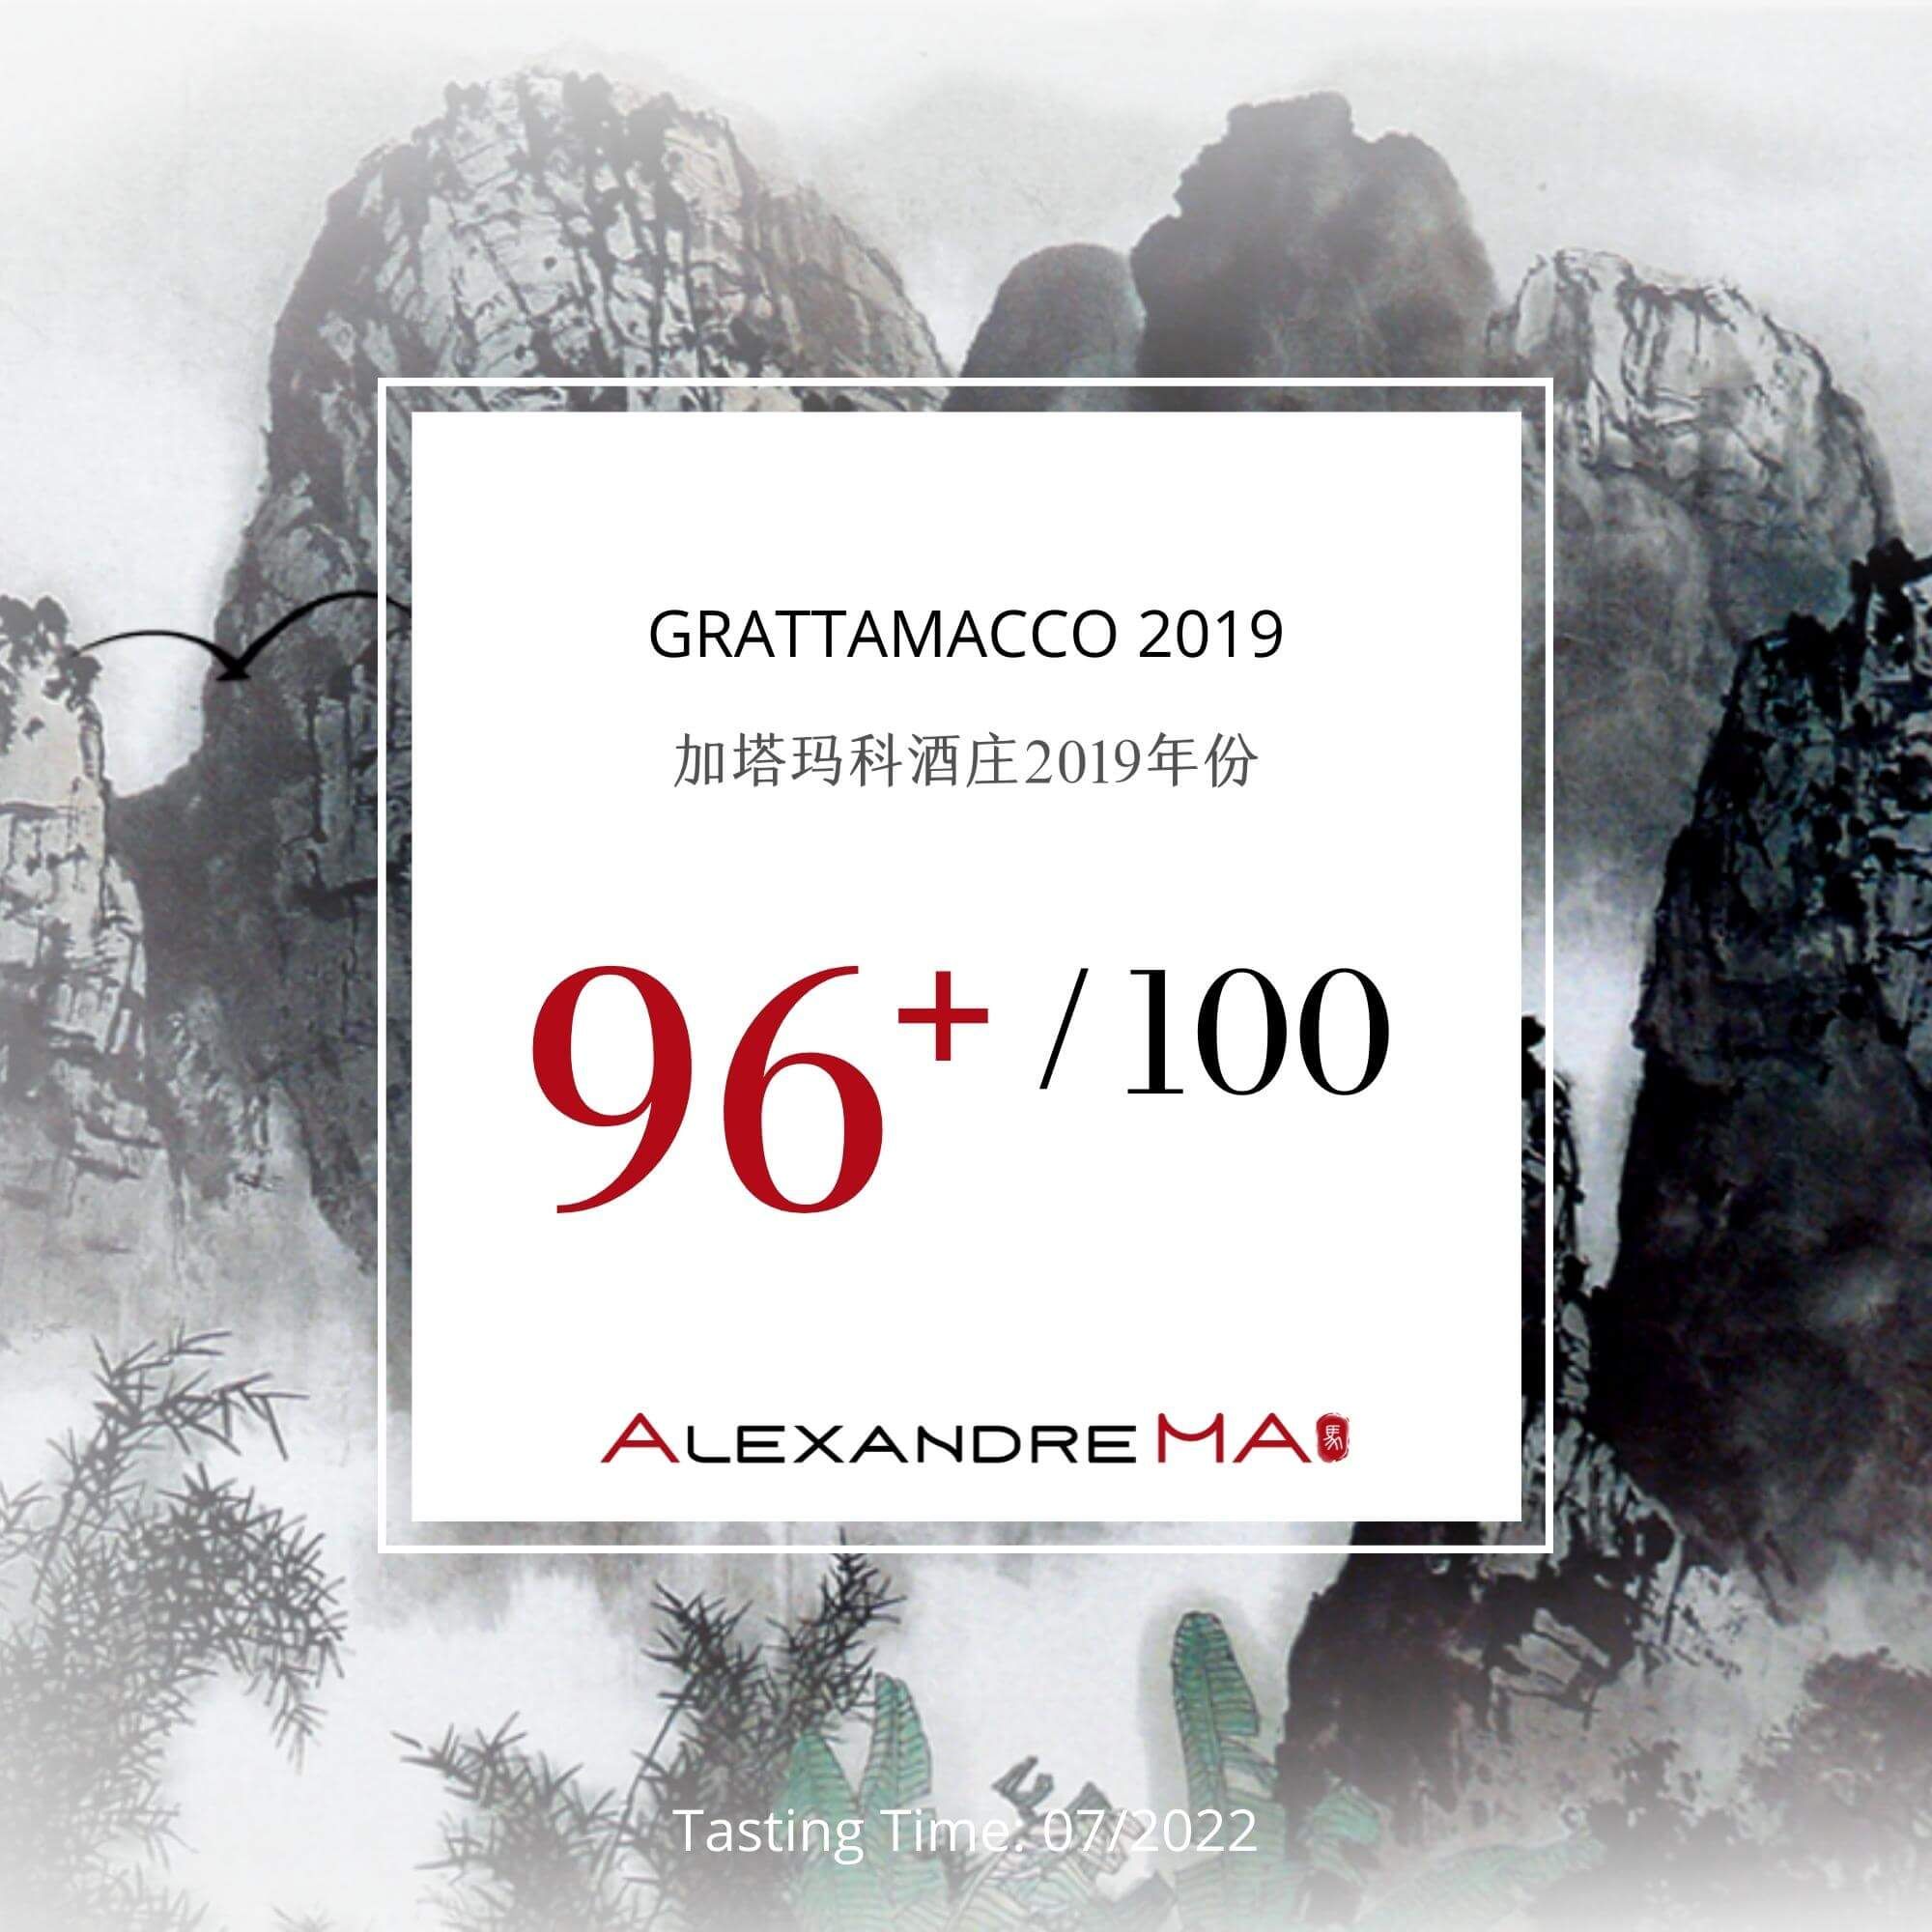 Grattamacco 2019 加塔玛科酒庄 - Alexandre Ma